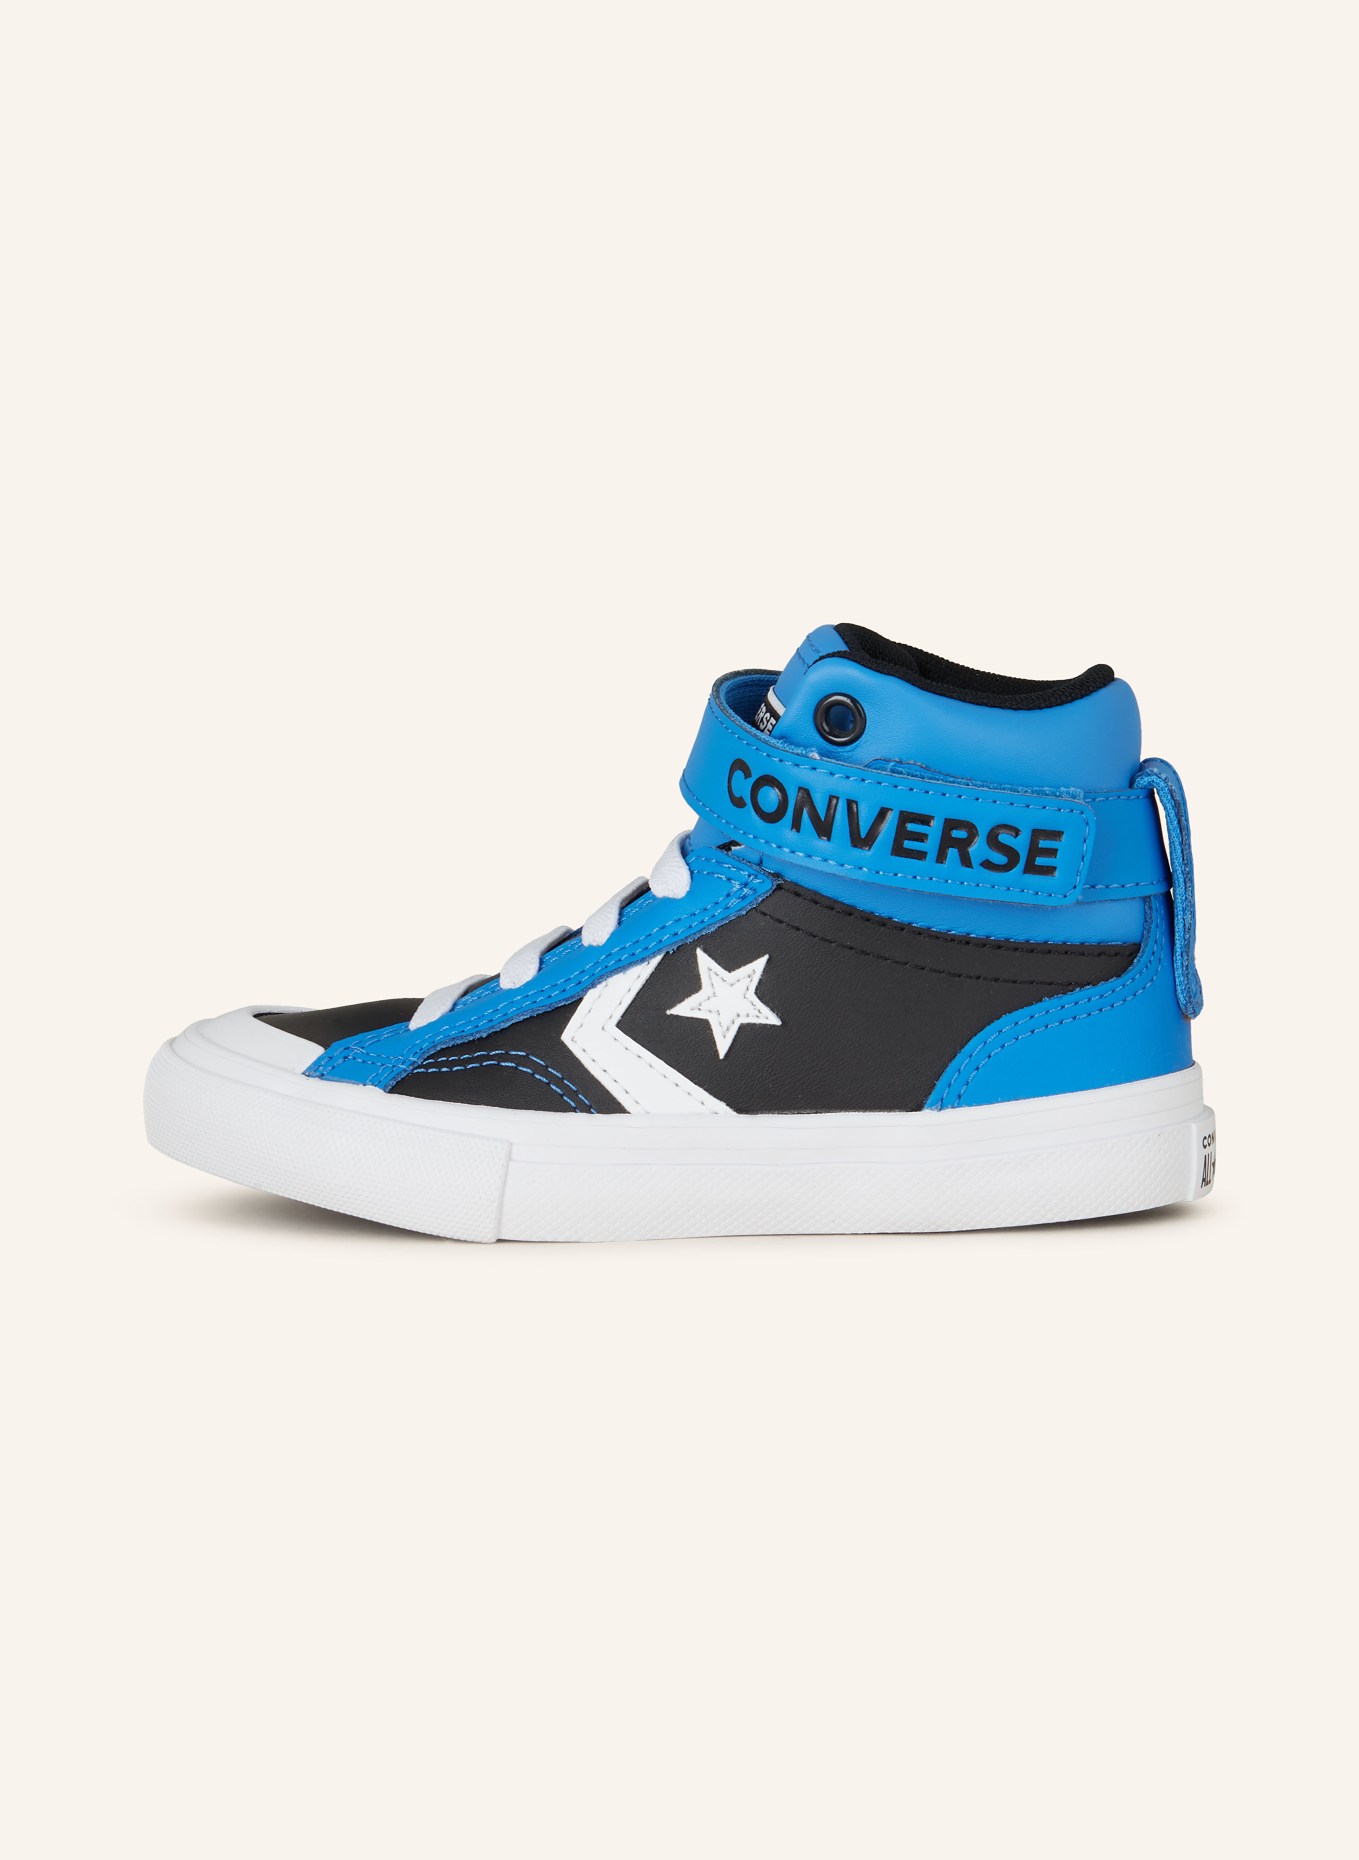 CONVERSE Hightop-Sneaker PRO BLAZE, Farbe: BLAU/ SCHWARZ (Bild 4)